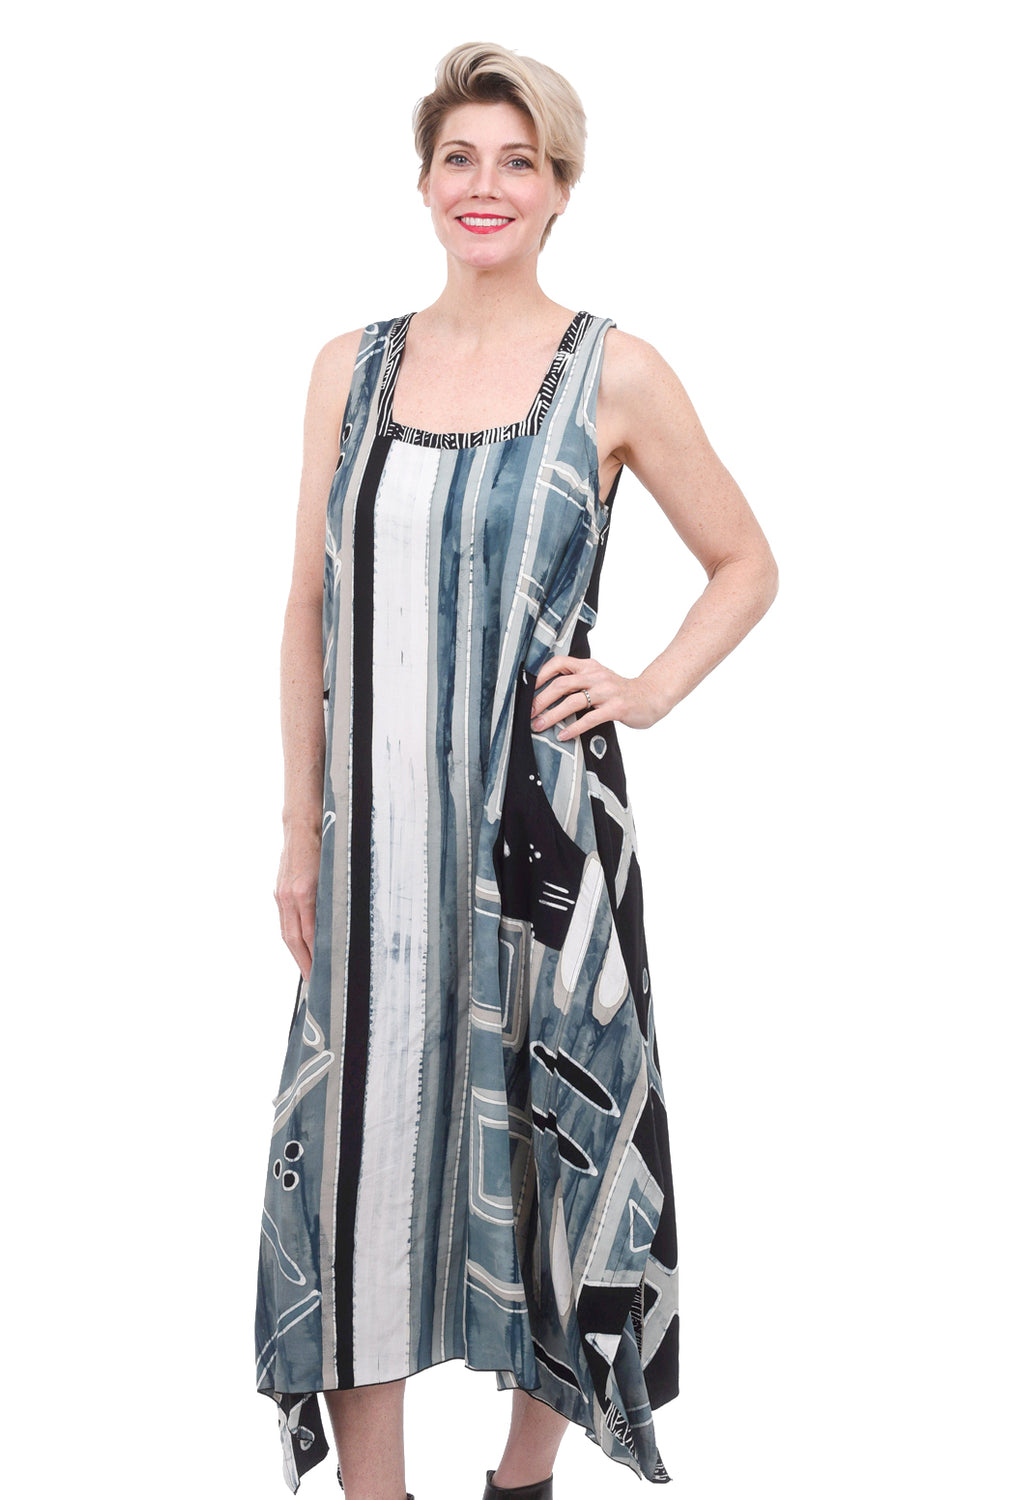 Maria Batik Dress, Wind